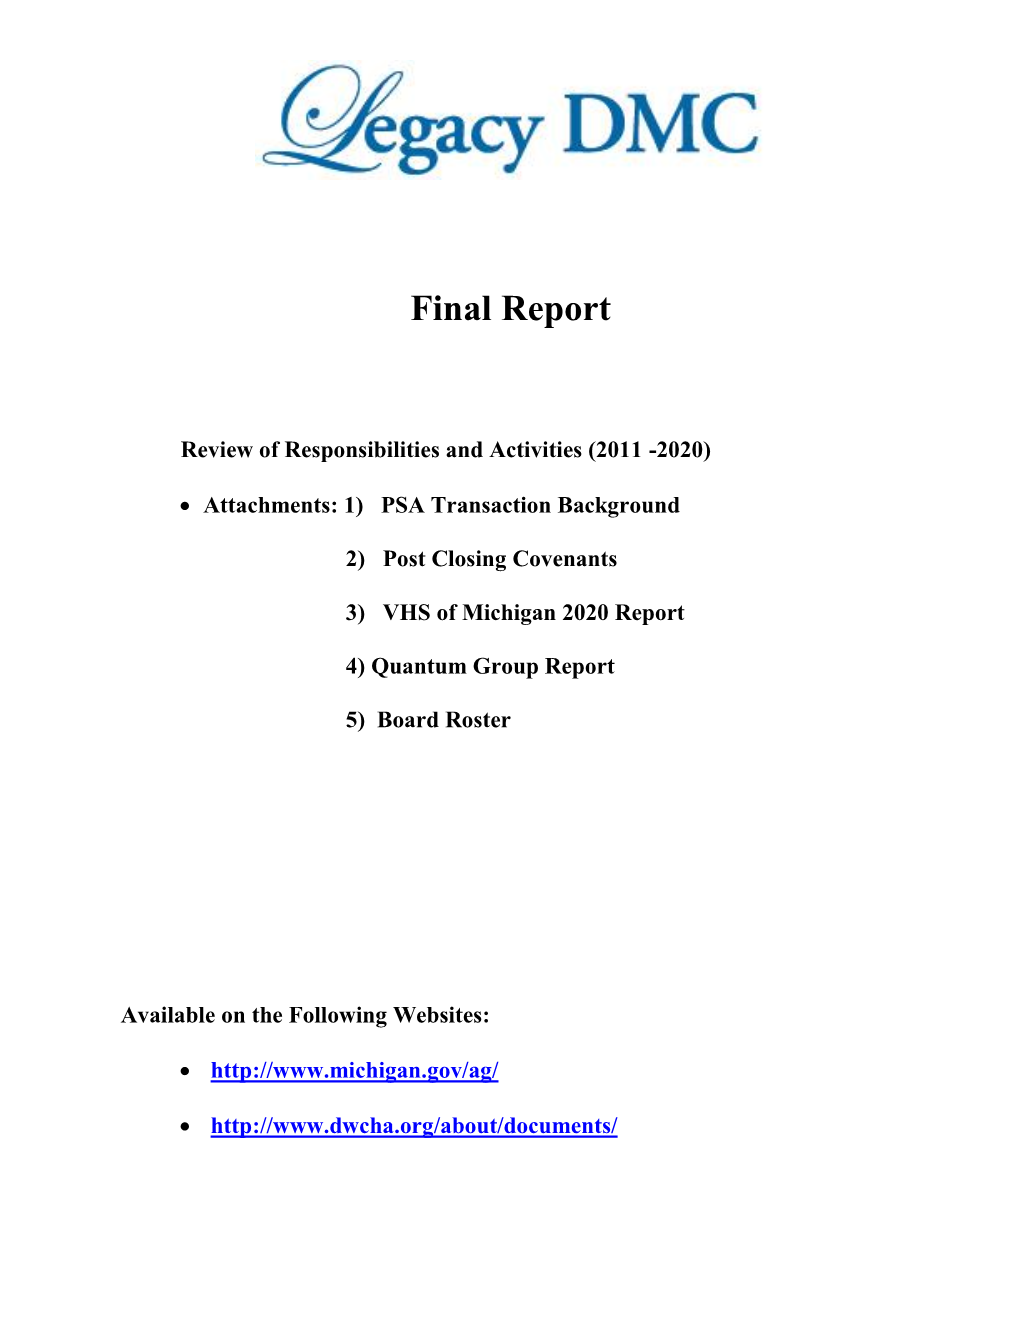 Legacy DMC 2020 Annual Report on VHS of Michigan (Vanguard)